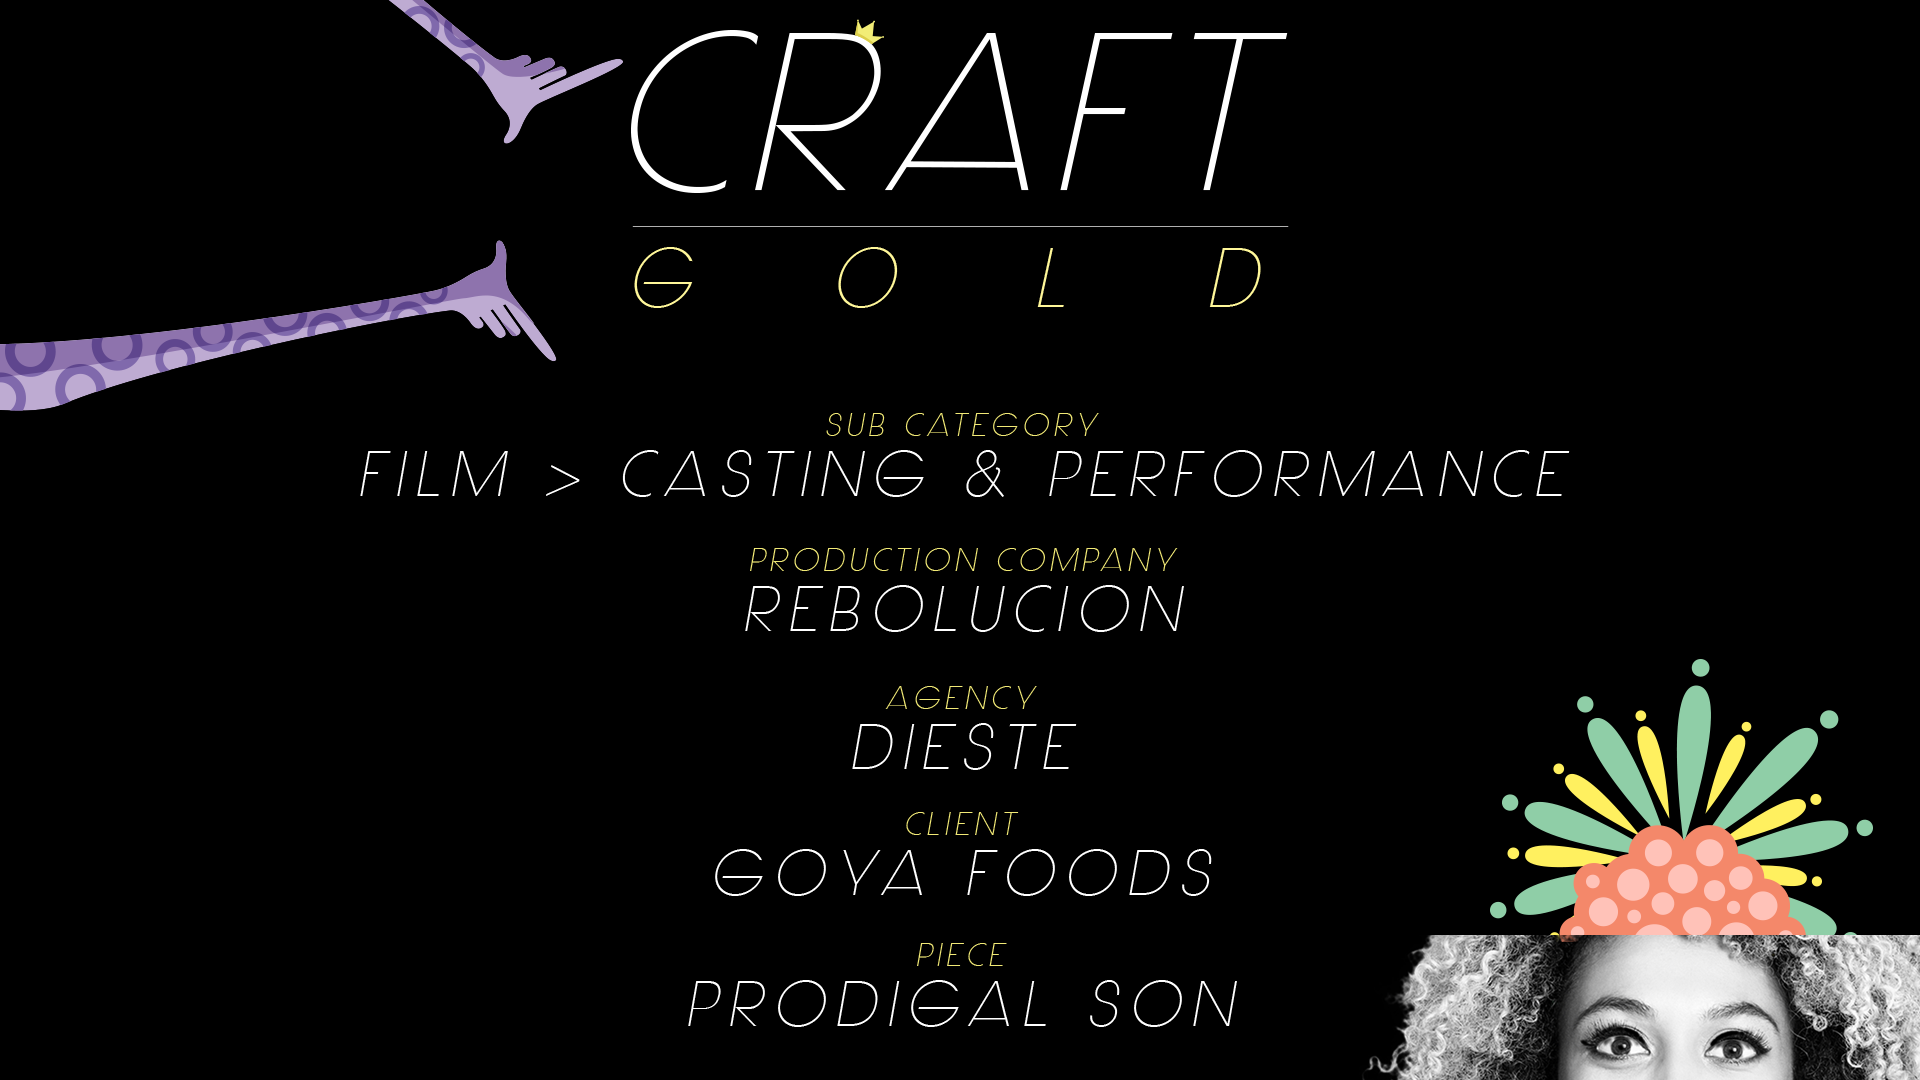 PLACAS GOLD-craft-FILM - CASTING & PERFORMANCE.png